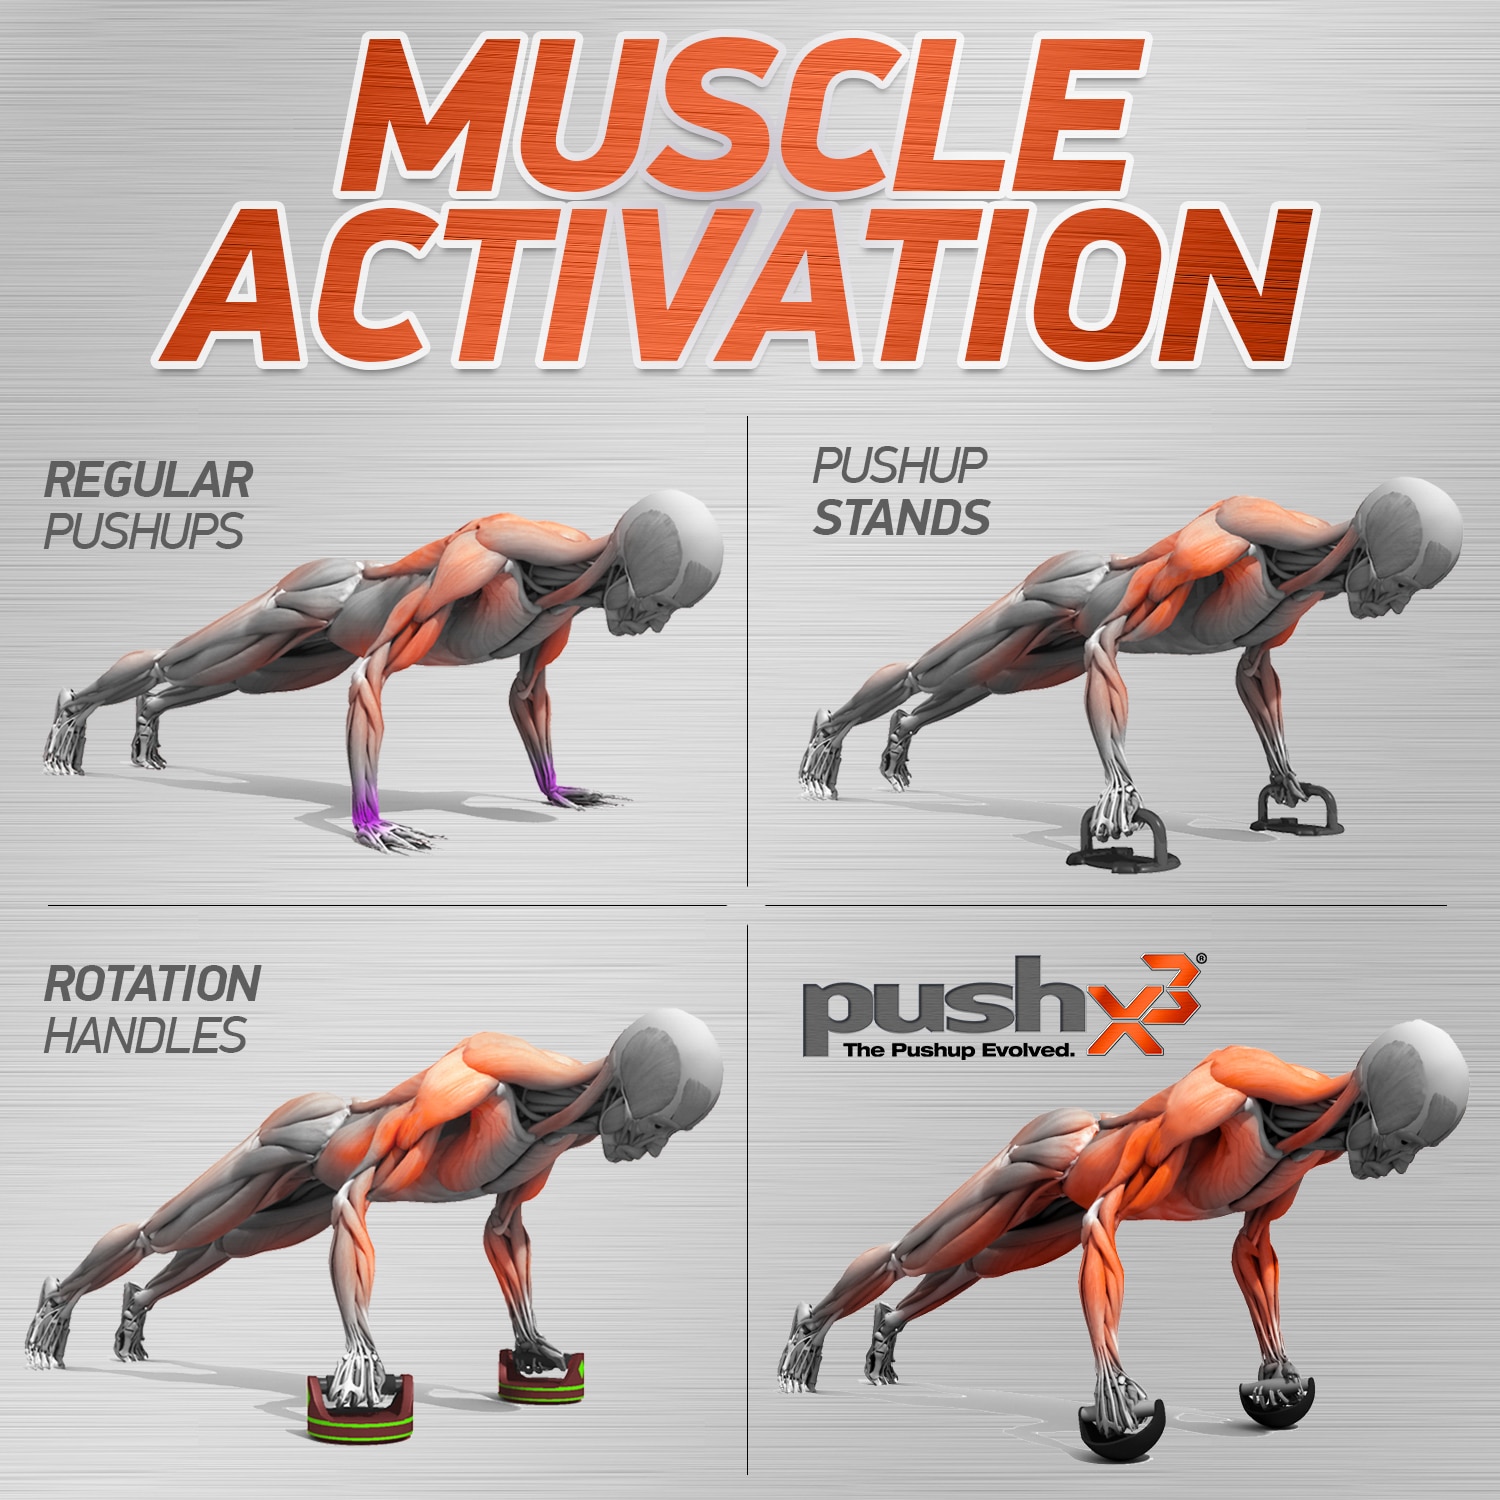 https://pushx3.com/wp-content/uploads/2022/02/image_3_muscle_activation.jpg